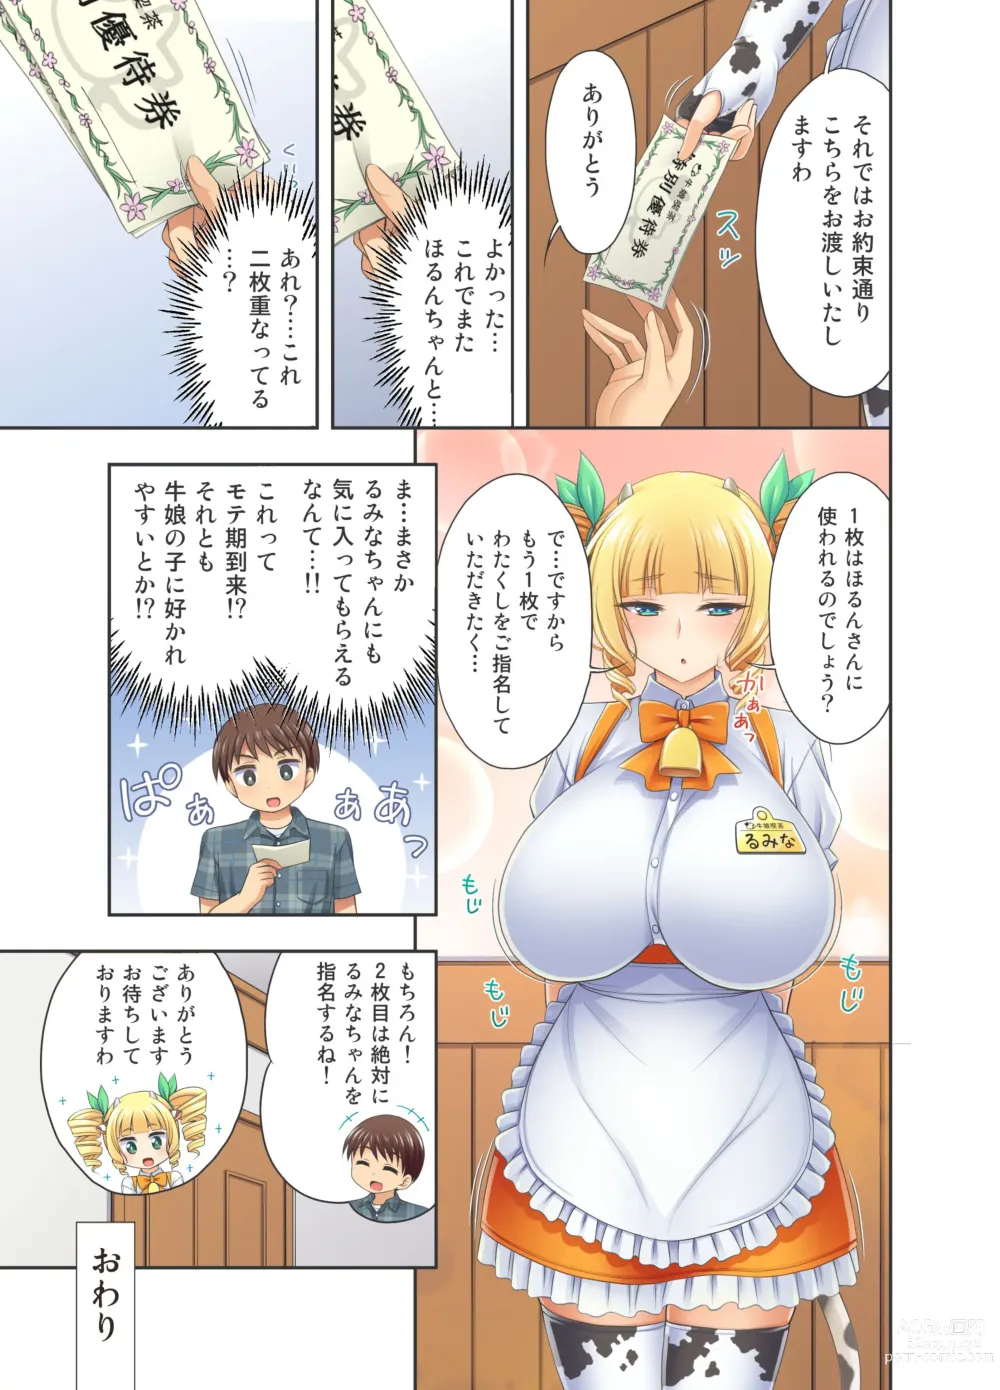 Page 22 of doujinshi Ushimusume Cafe 4